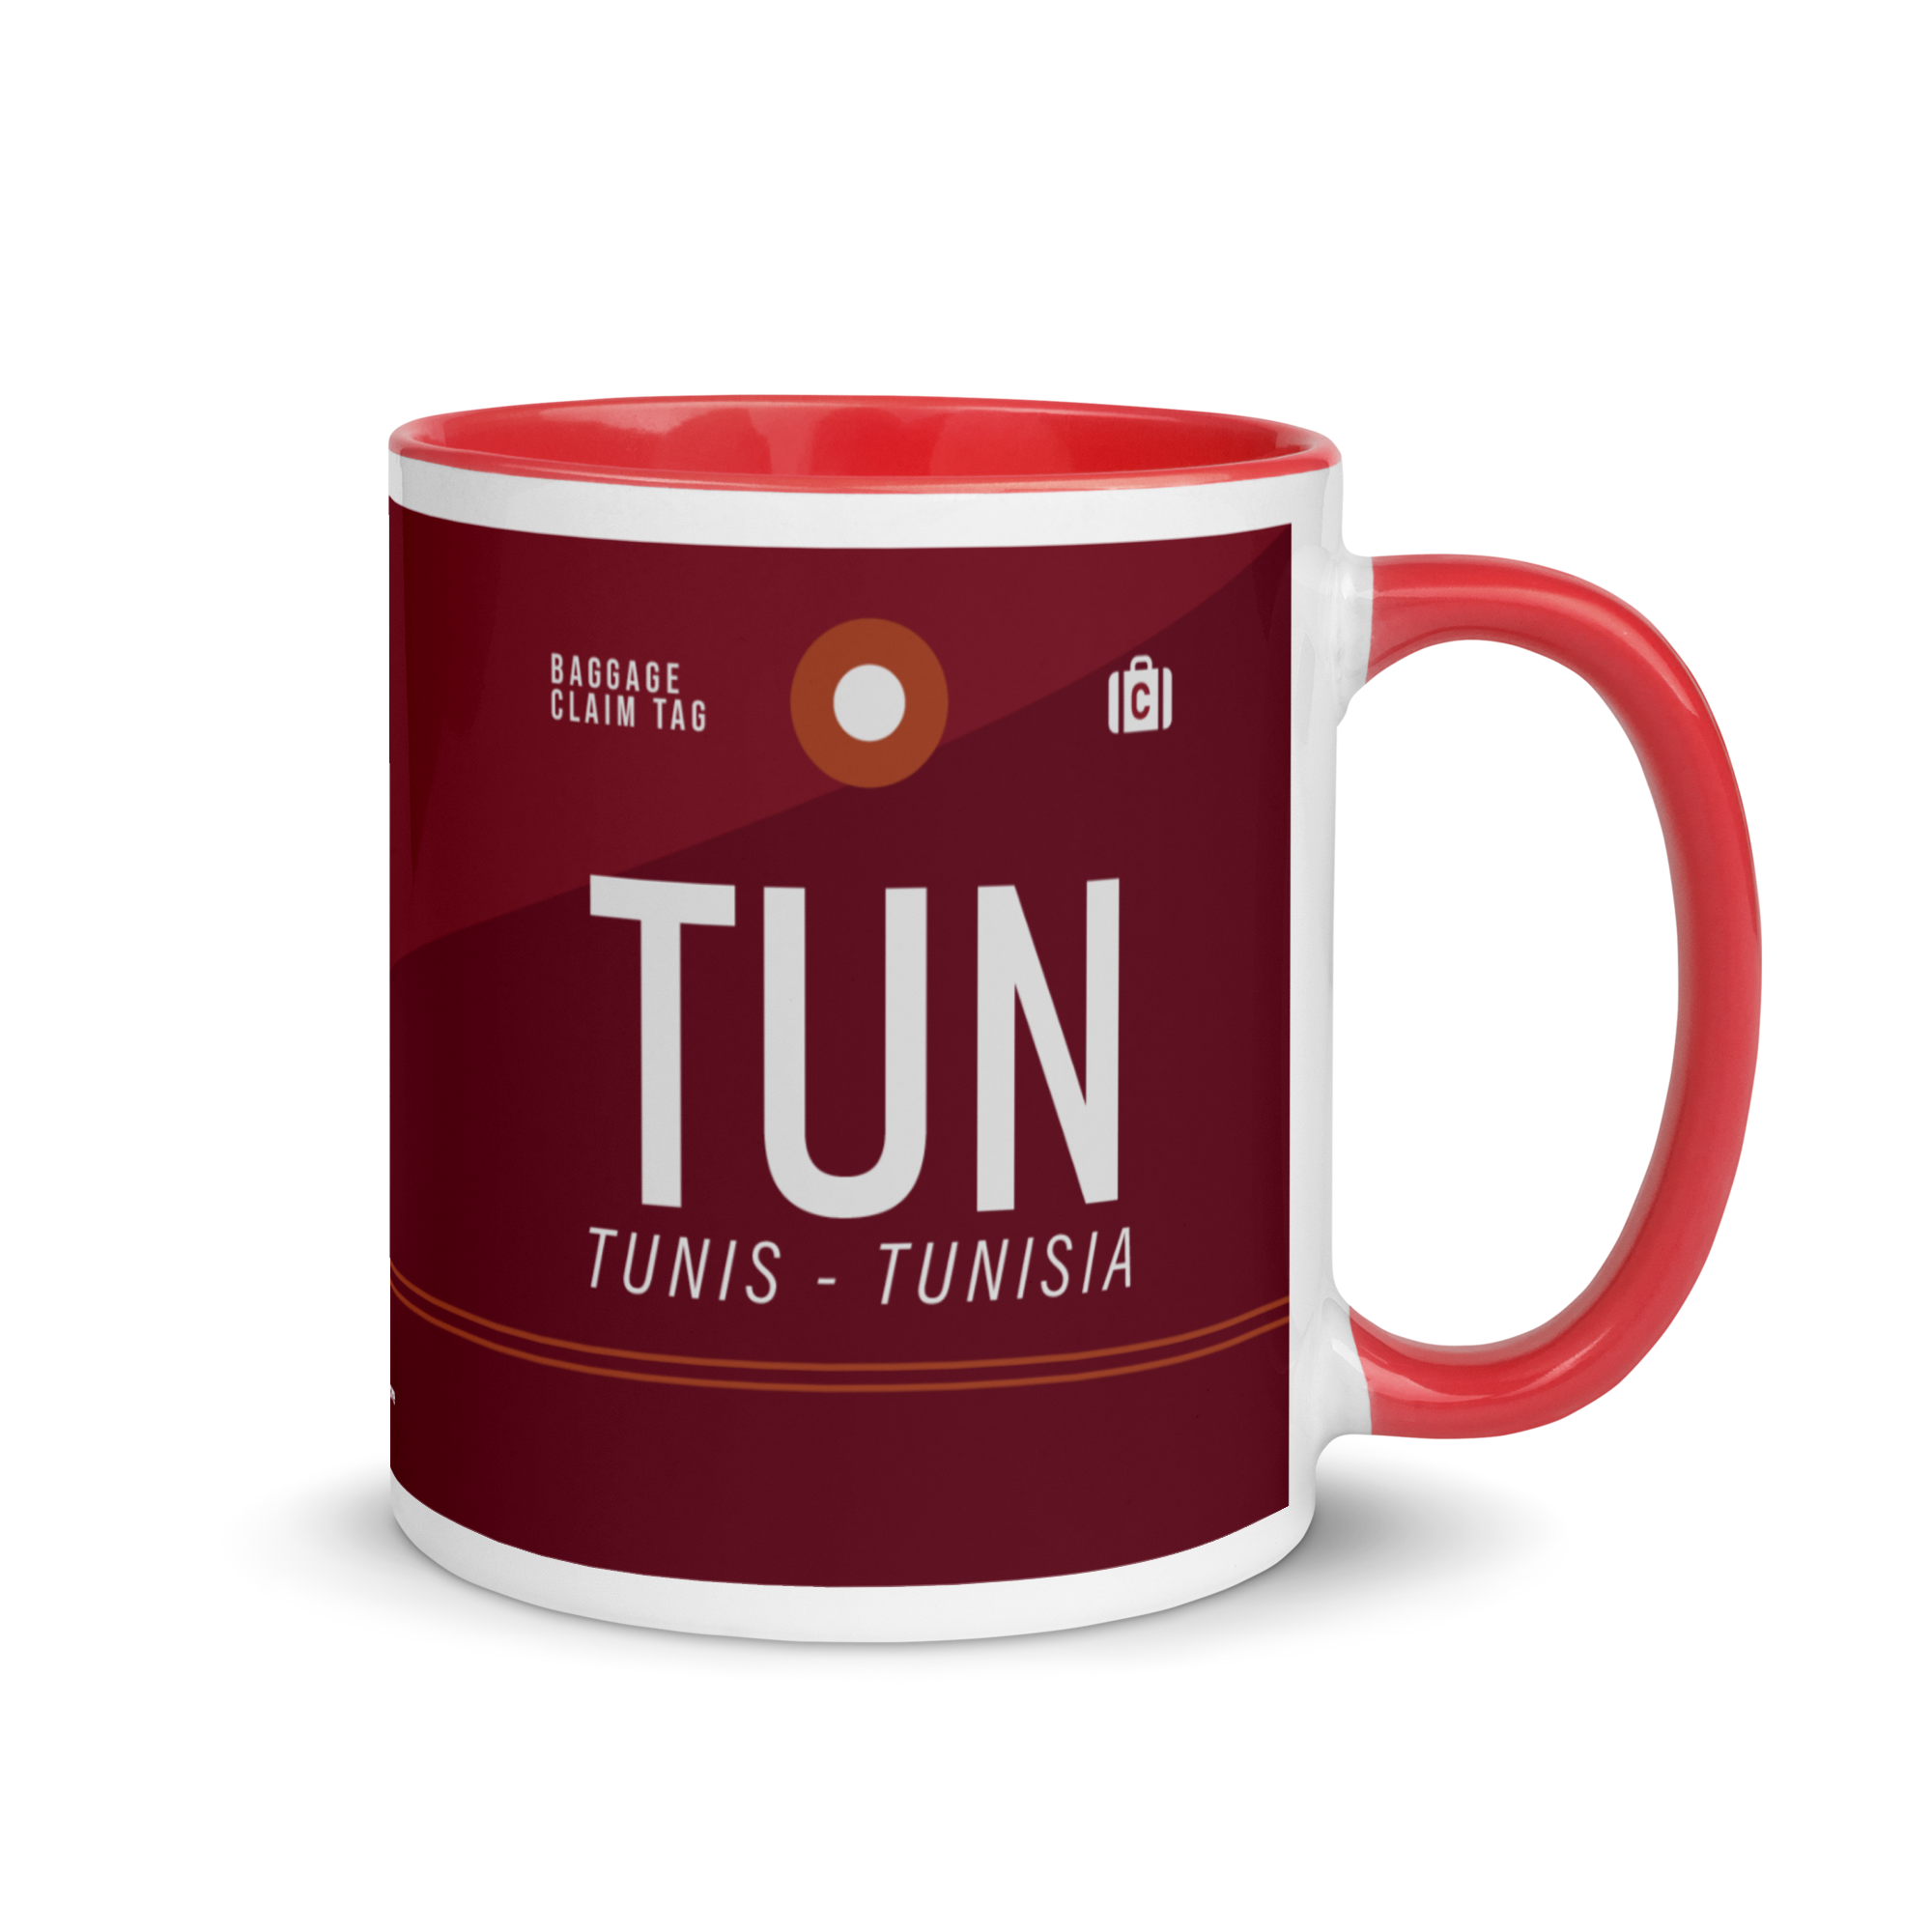 TUN - Tunis Airport Code Mug with colored interior